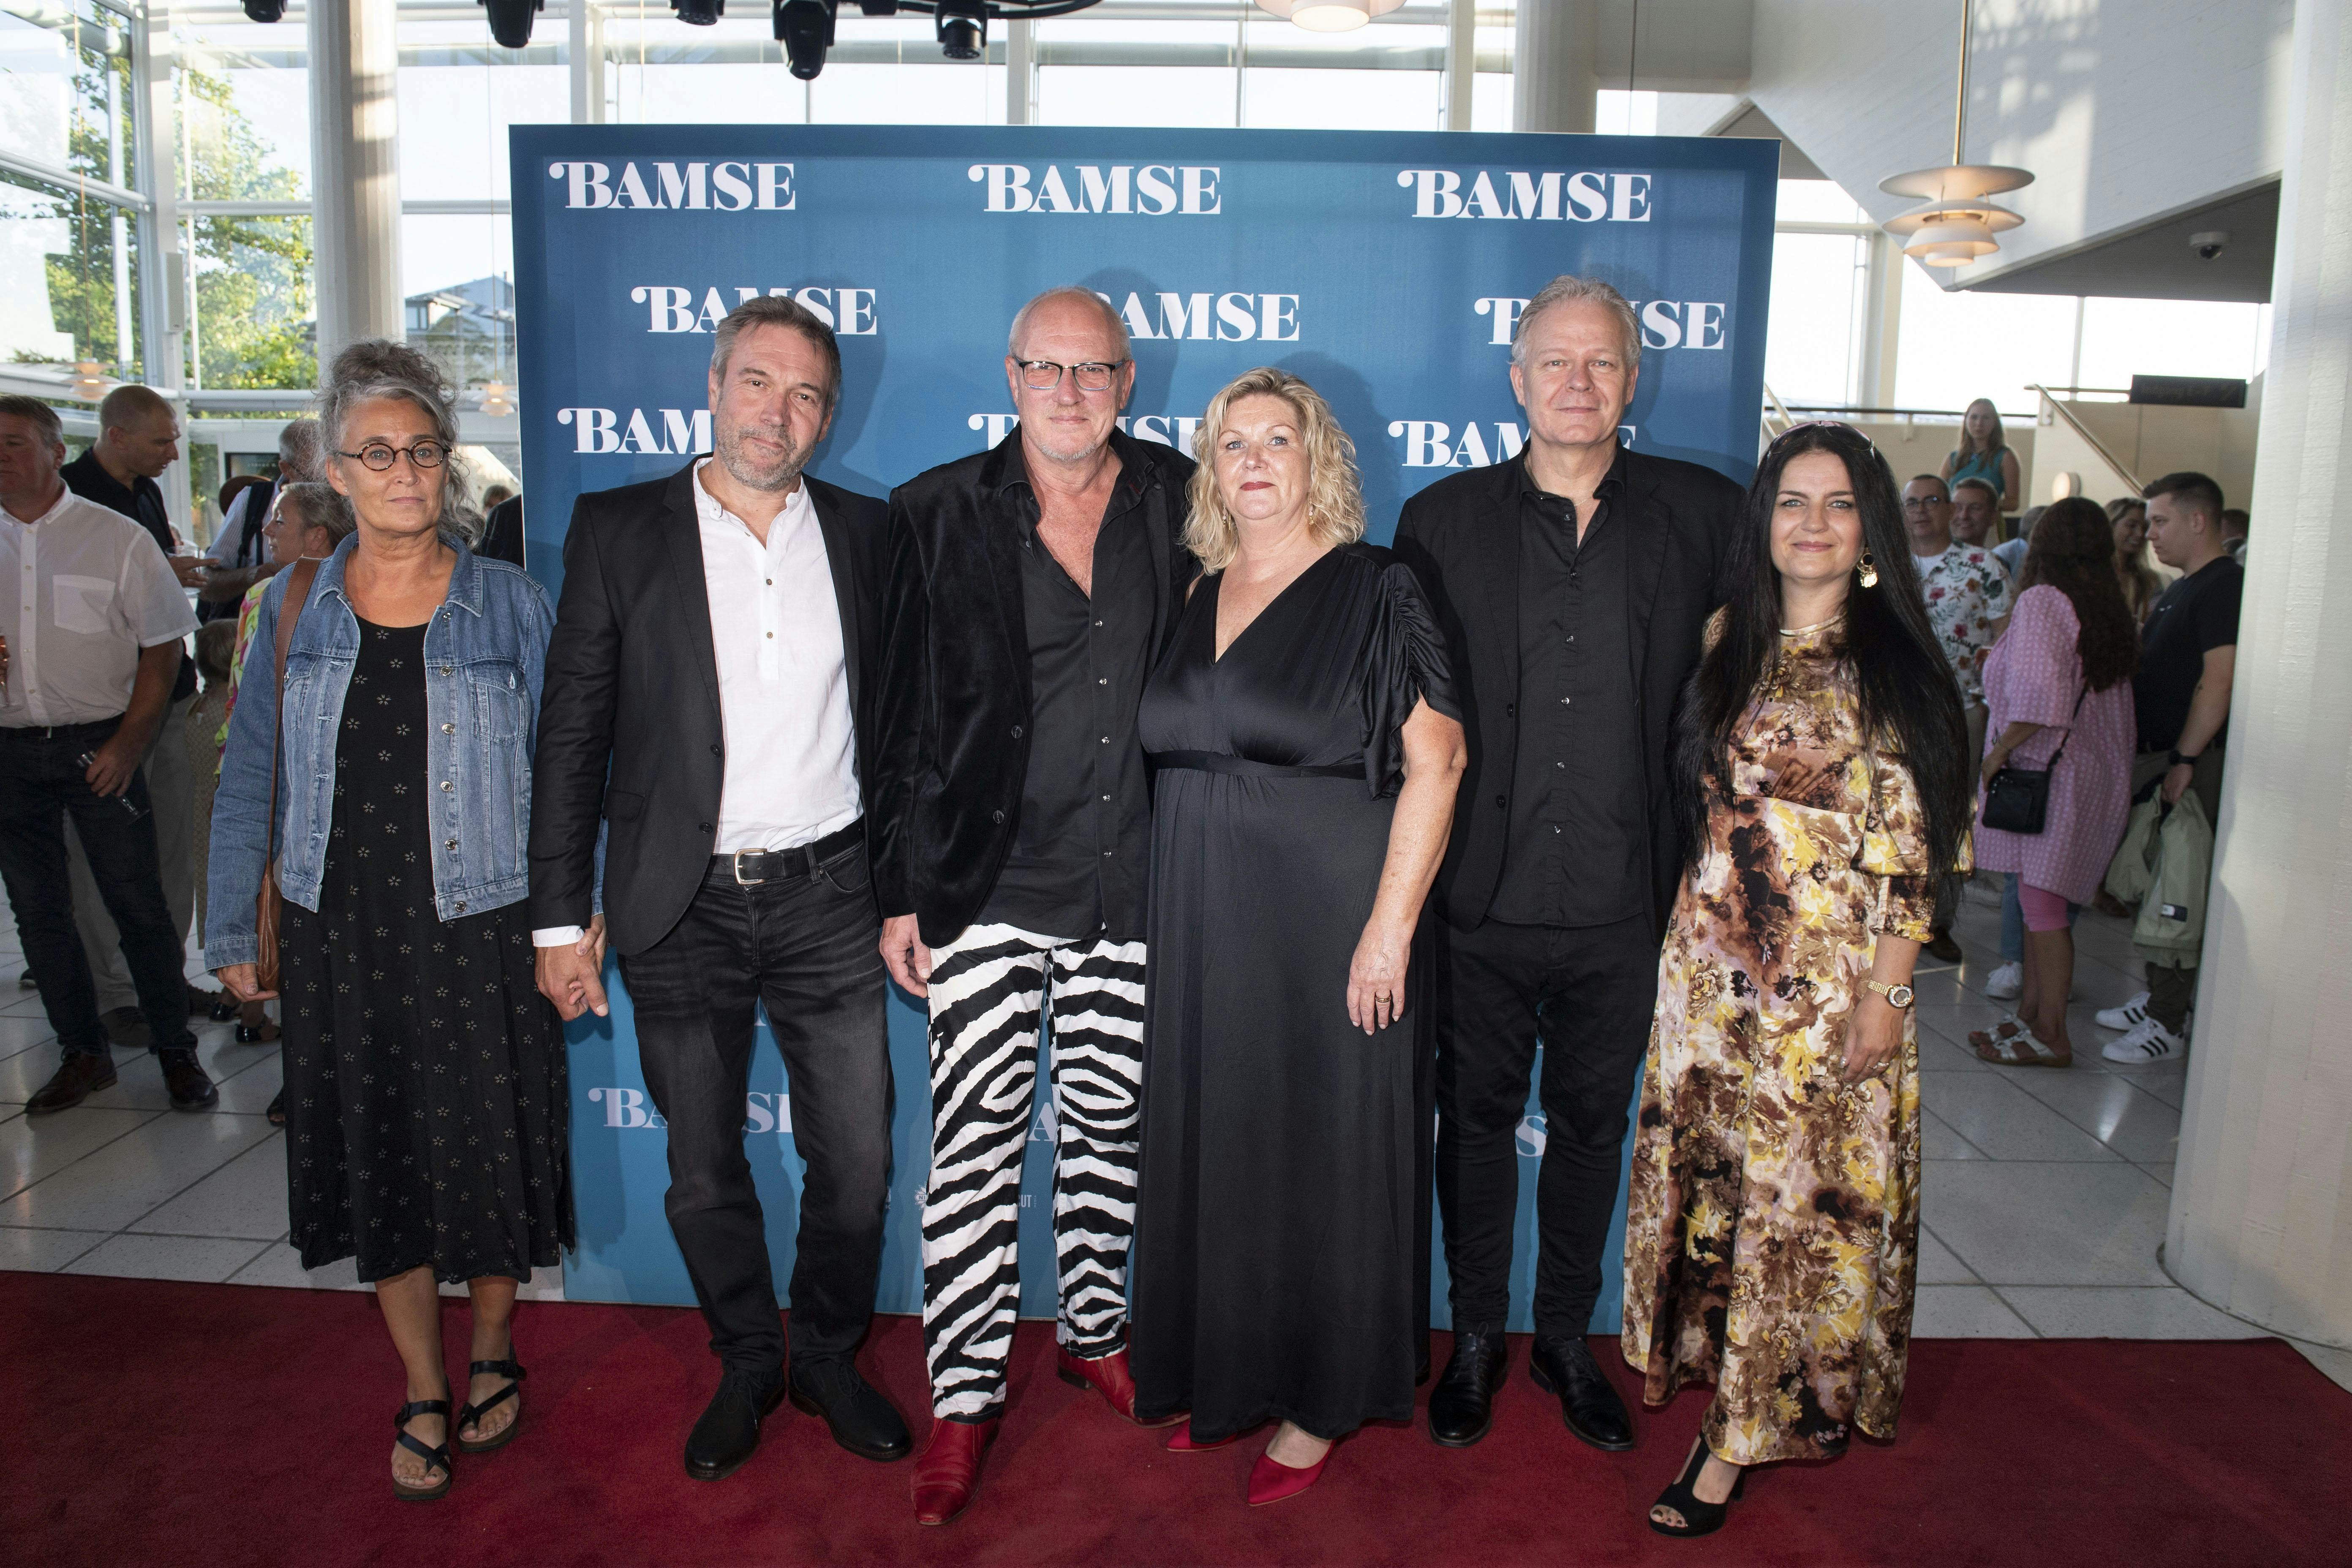 Anders Lampe i den hvide skjorte var med til premieren på filmen "Bamse".